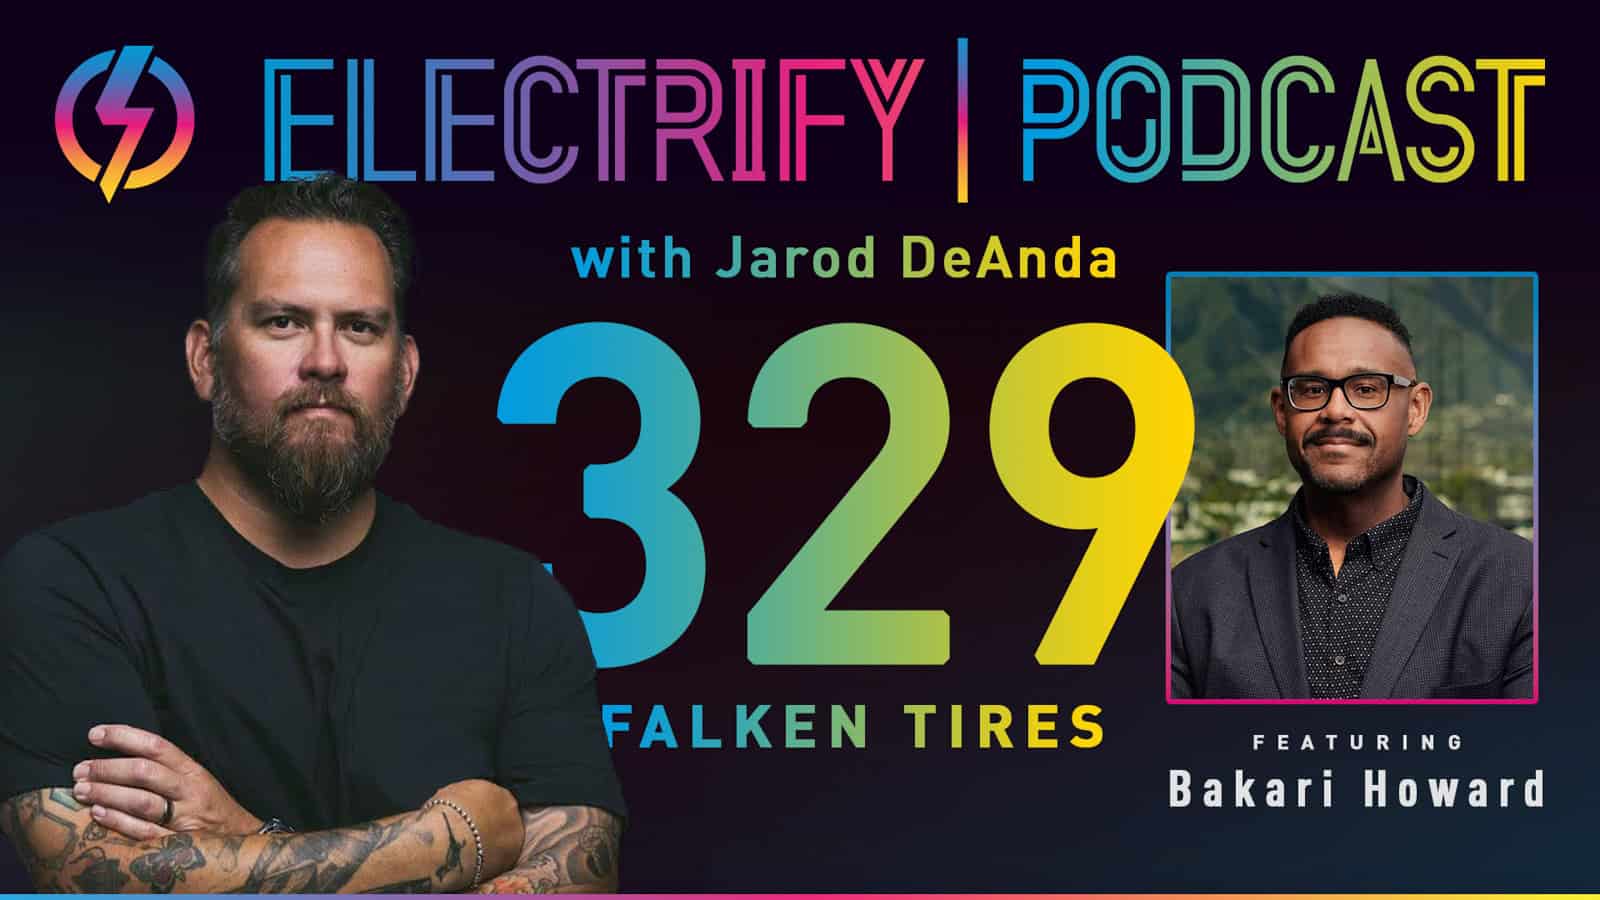 Electrify Podcast Episode 329 with Host Jarod DeAnda and Bakari Howard of Falken Tires